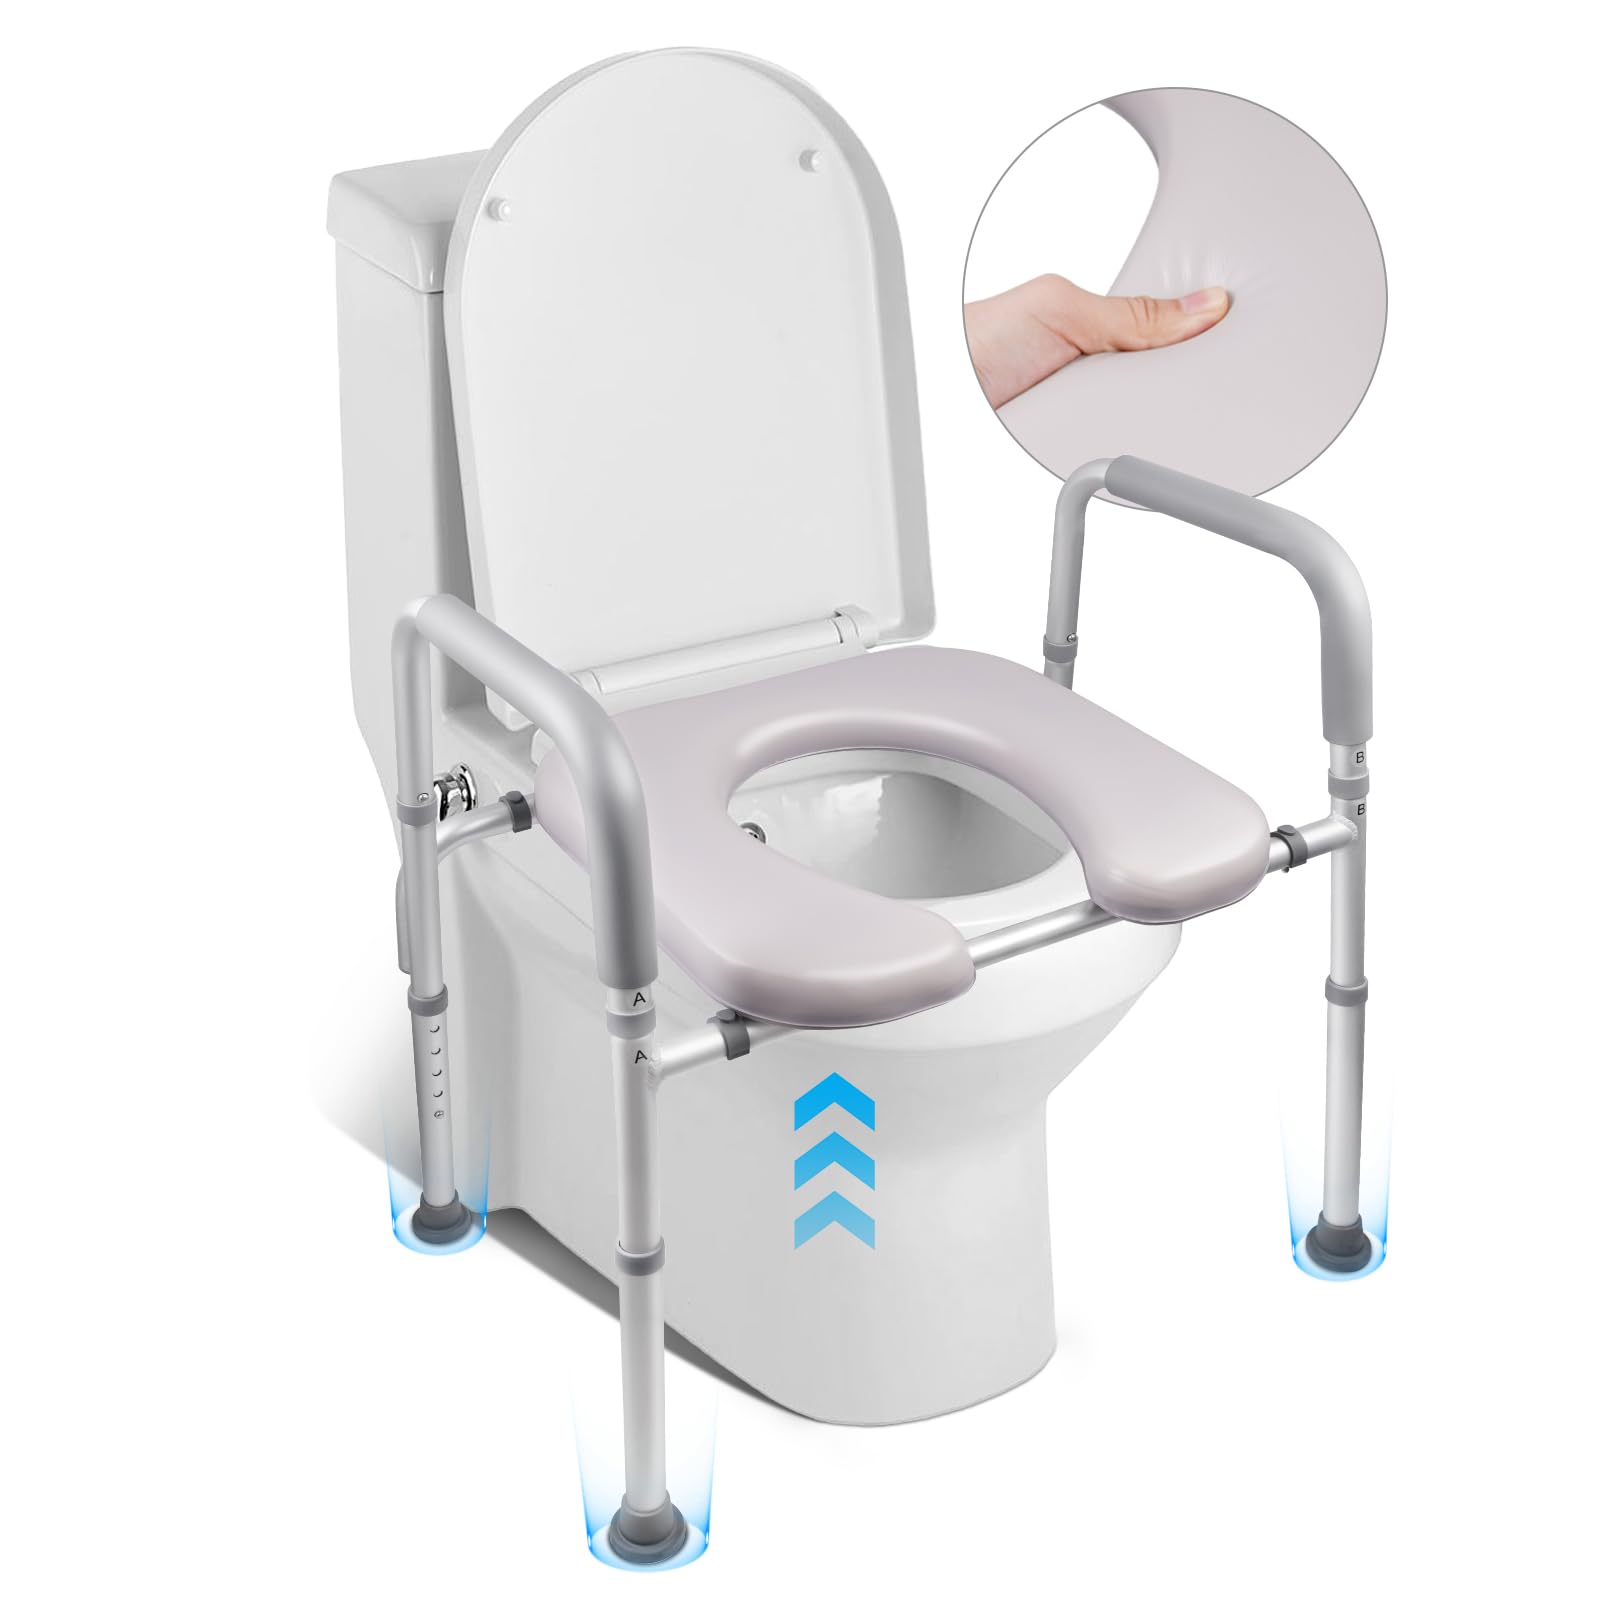 Hotodeal Toilet Seat Risers For Seniors